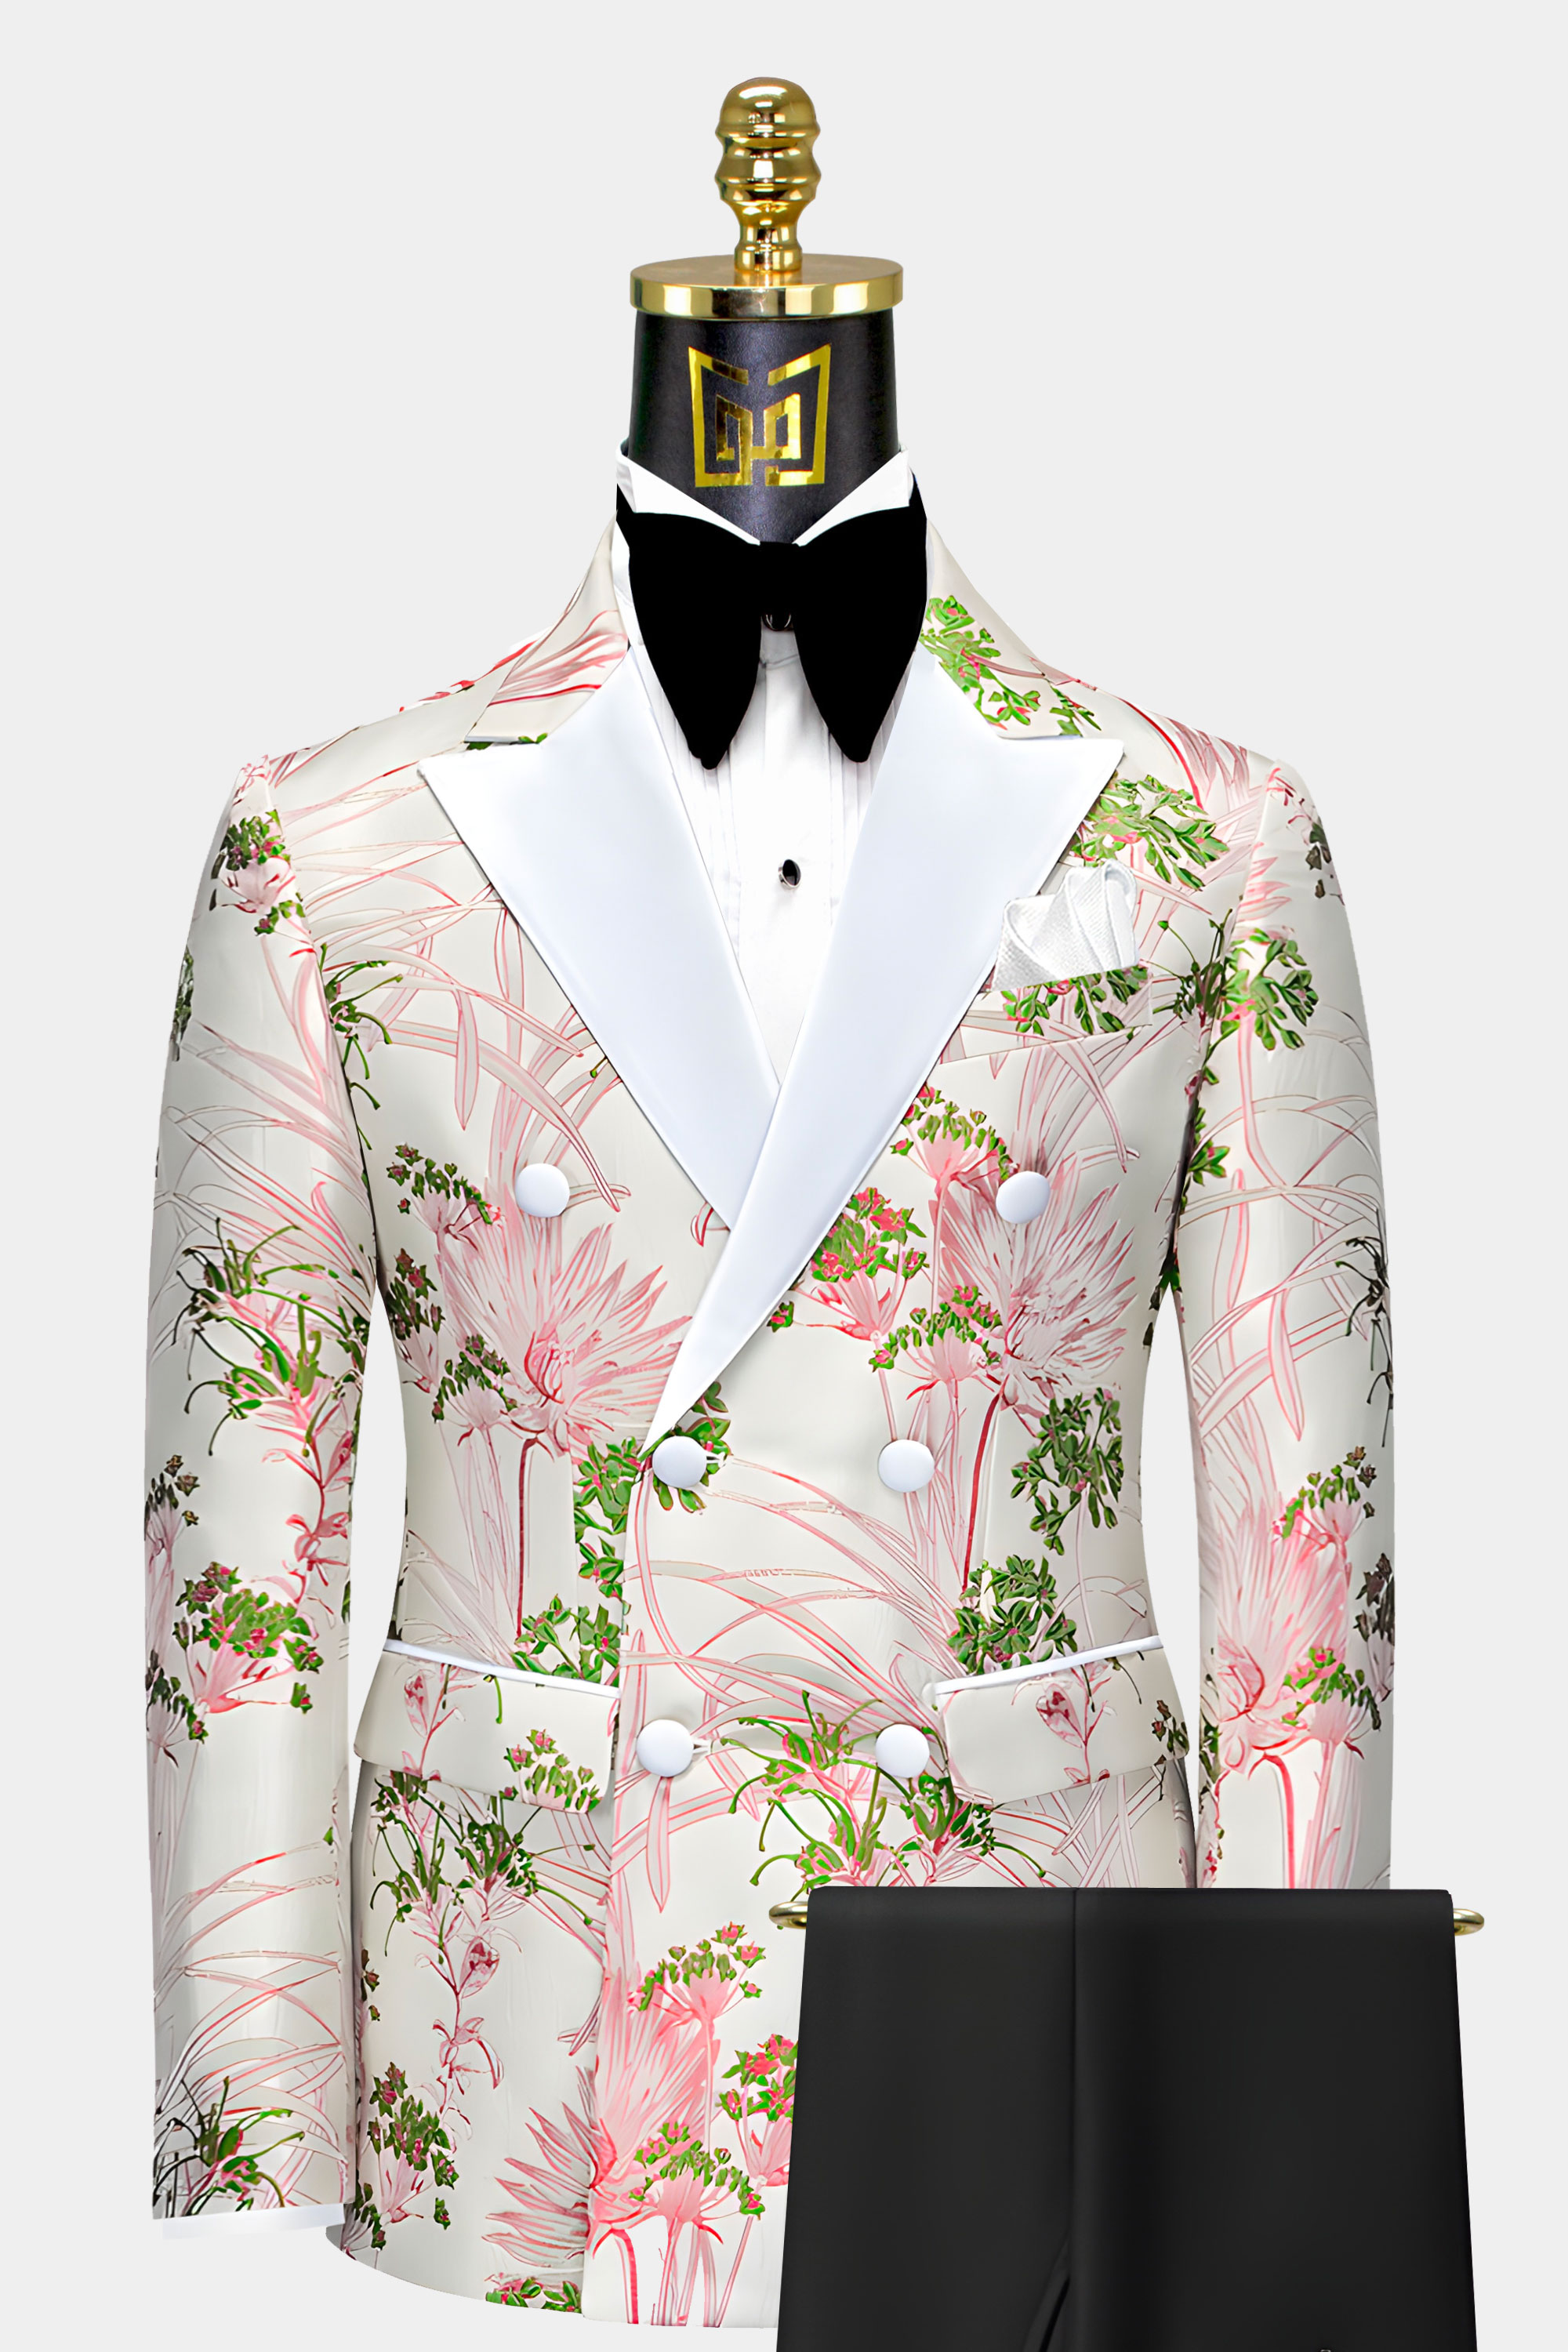 Black-and-Lush-Floral-Wedding-Tuxedo-Groom-Suit-from-Gentlemansguru.com